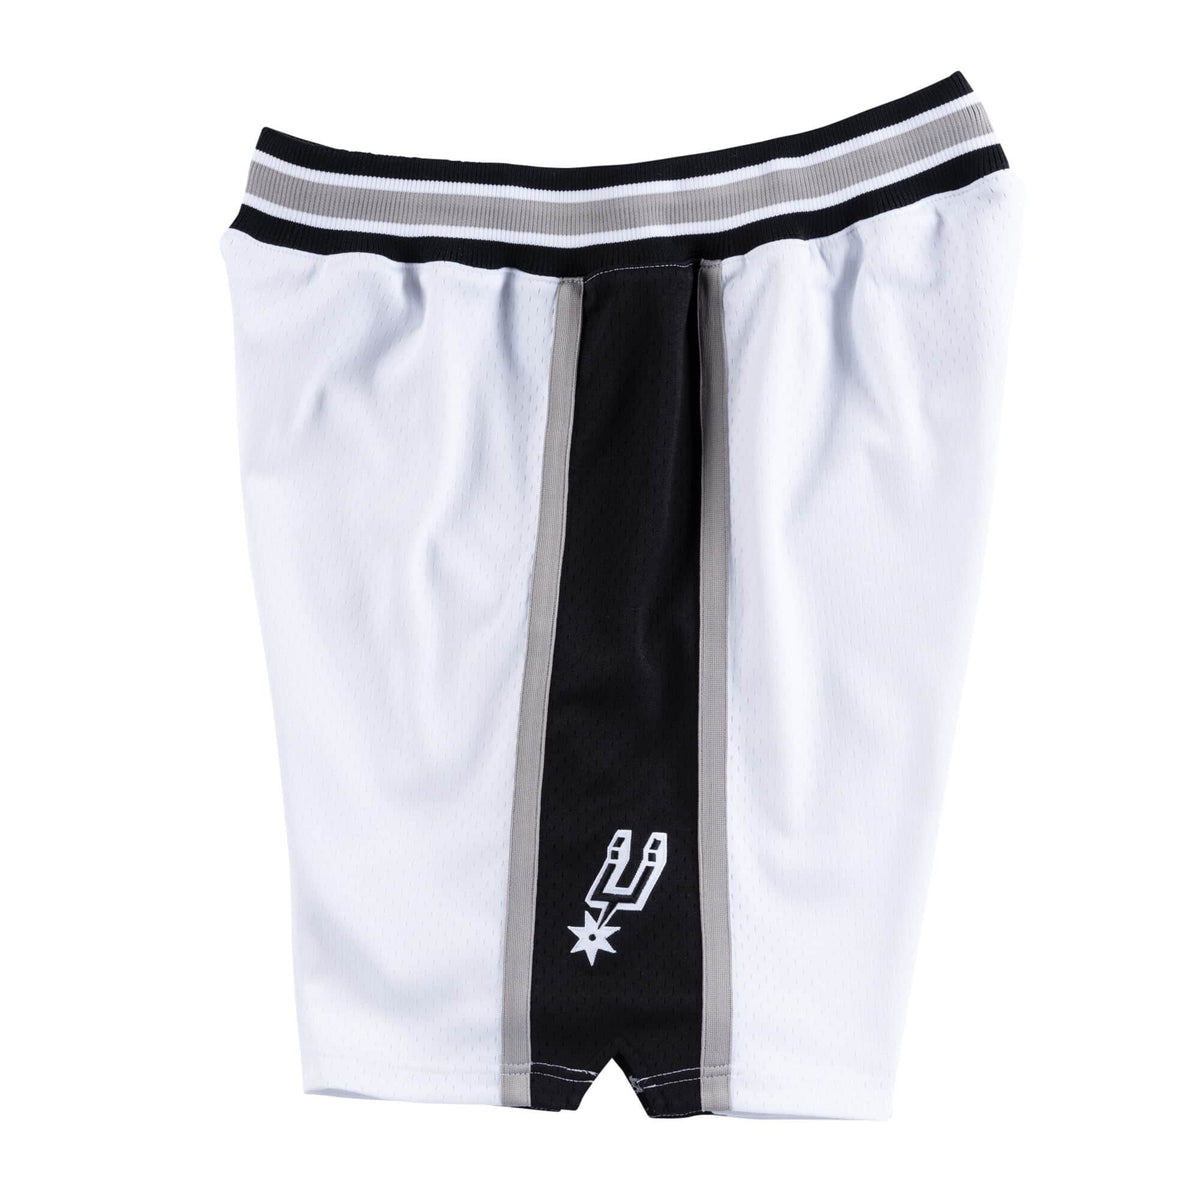 authentic nba shorts